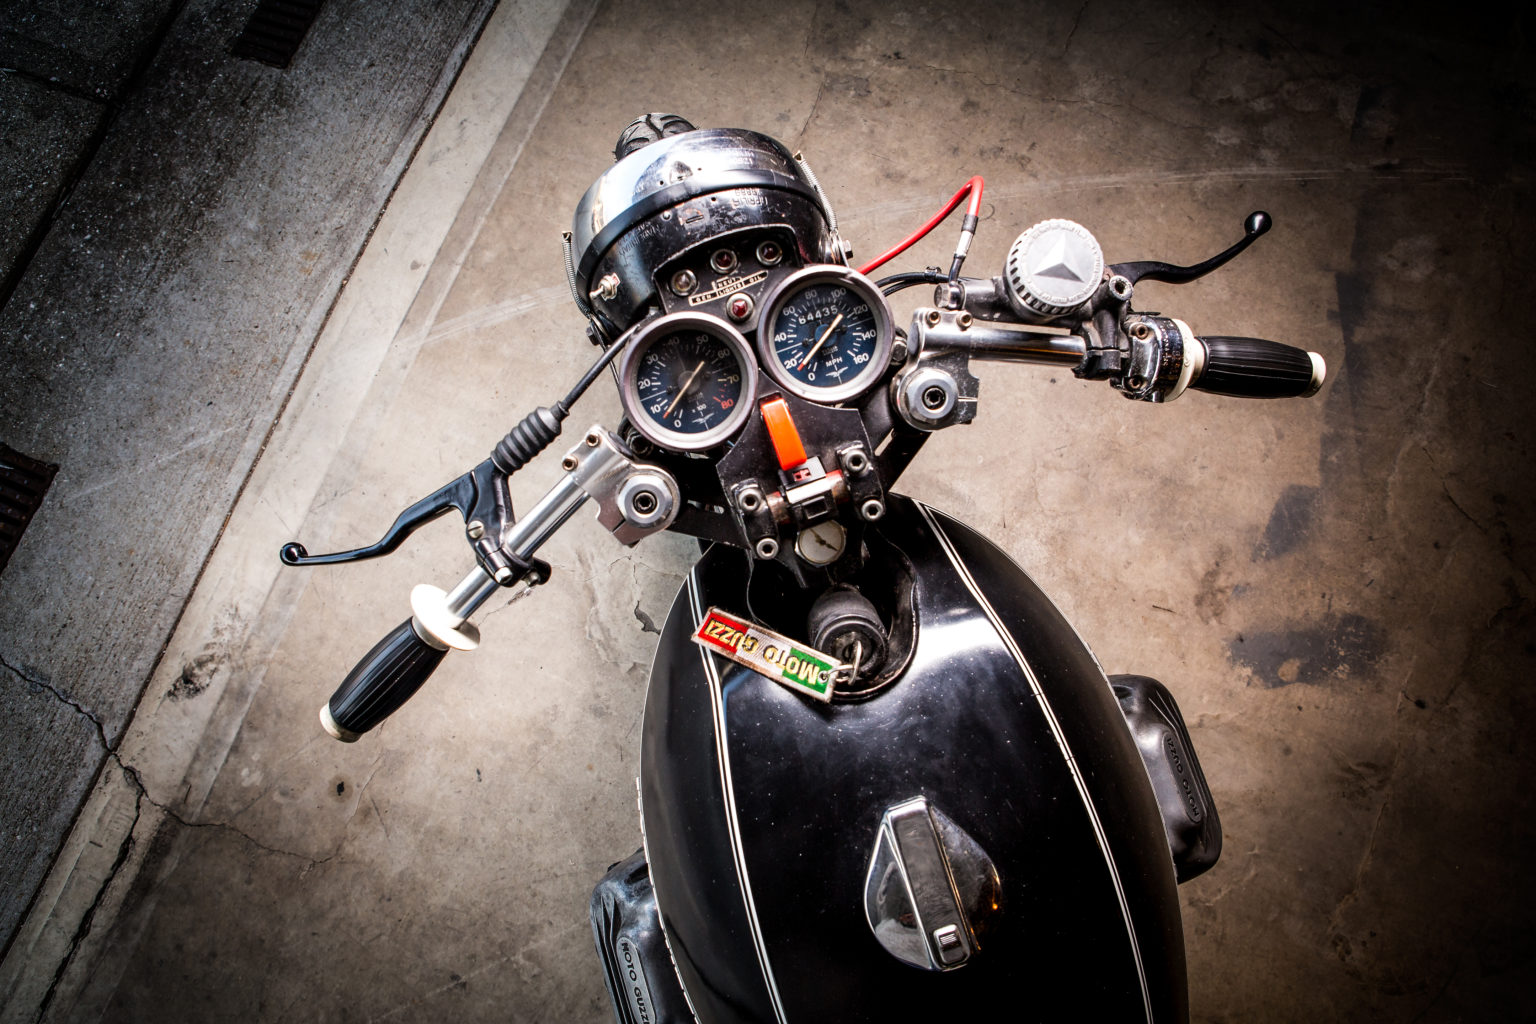 Moto Guzzi 850T Cafe Racer by Jeff Parrish